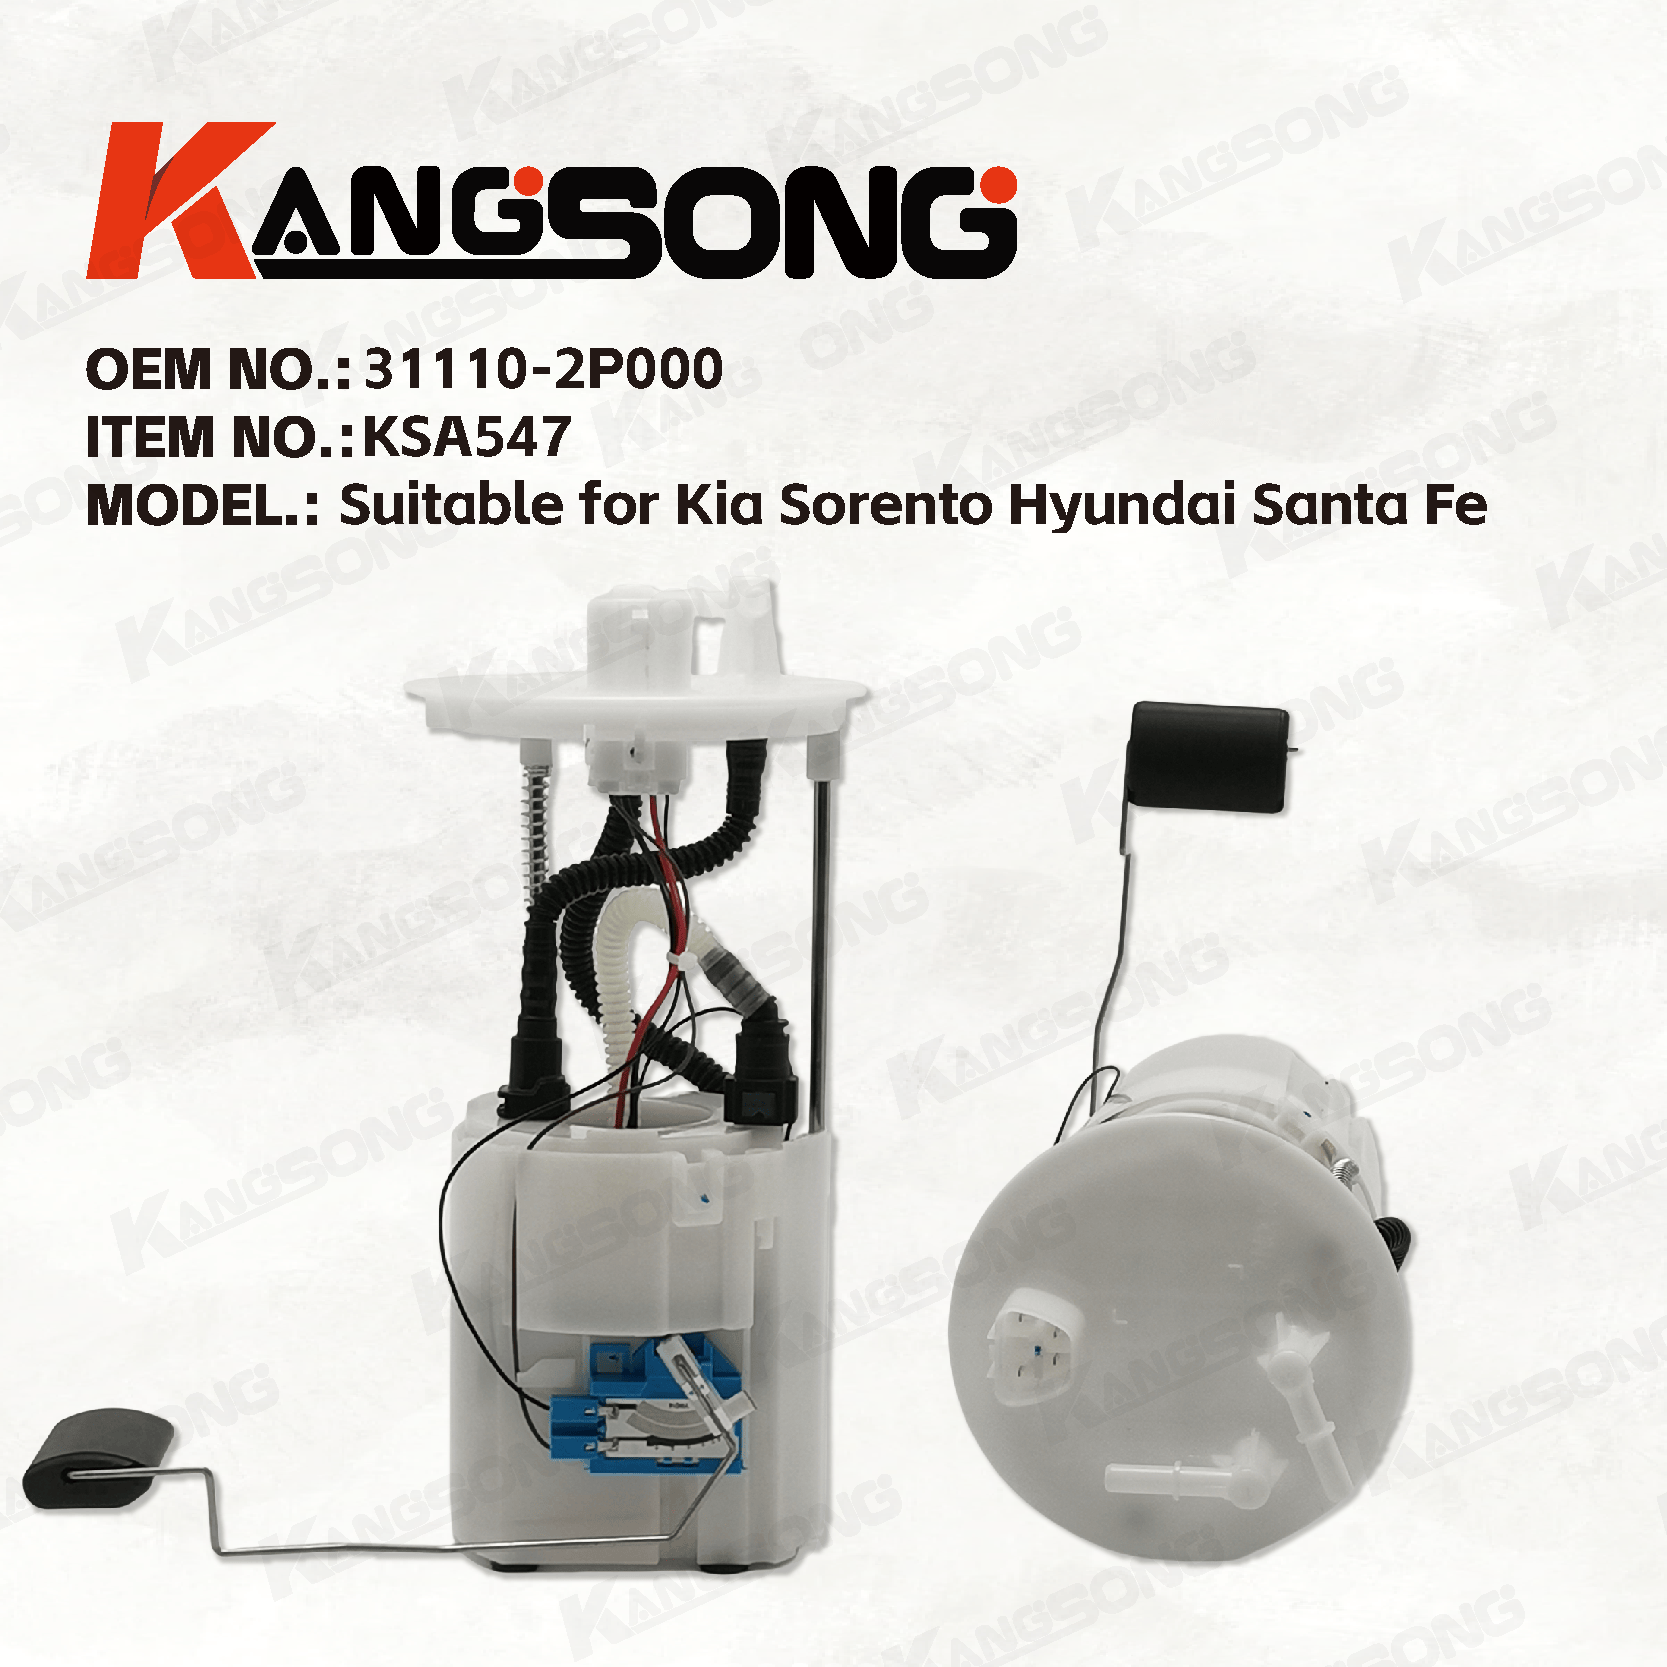 Applicable to Kia Sorento Hyundai Santa Fe/31110-2P000/Fuel Pump Assembly/KSA547